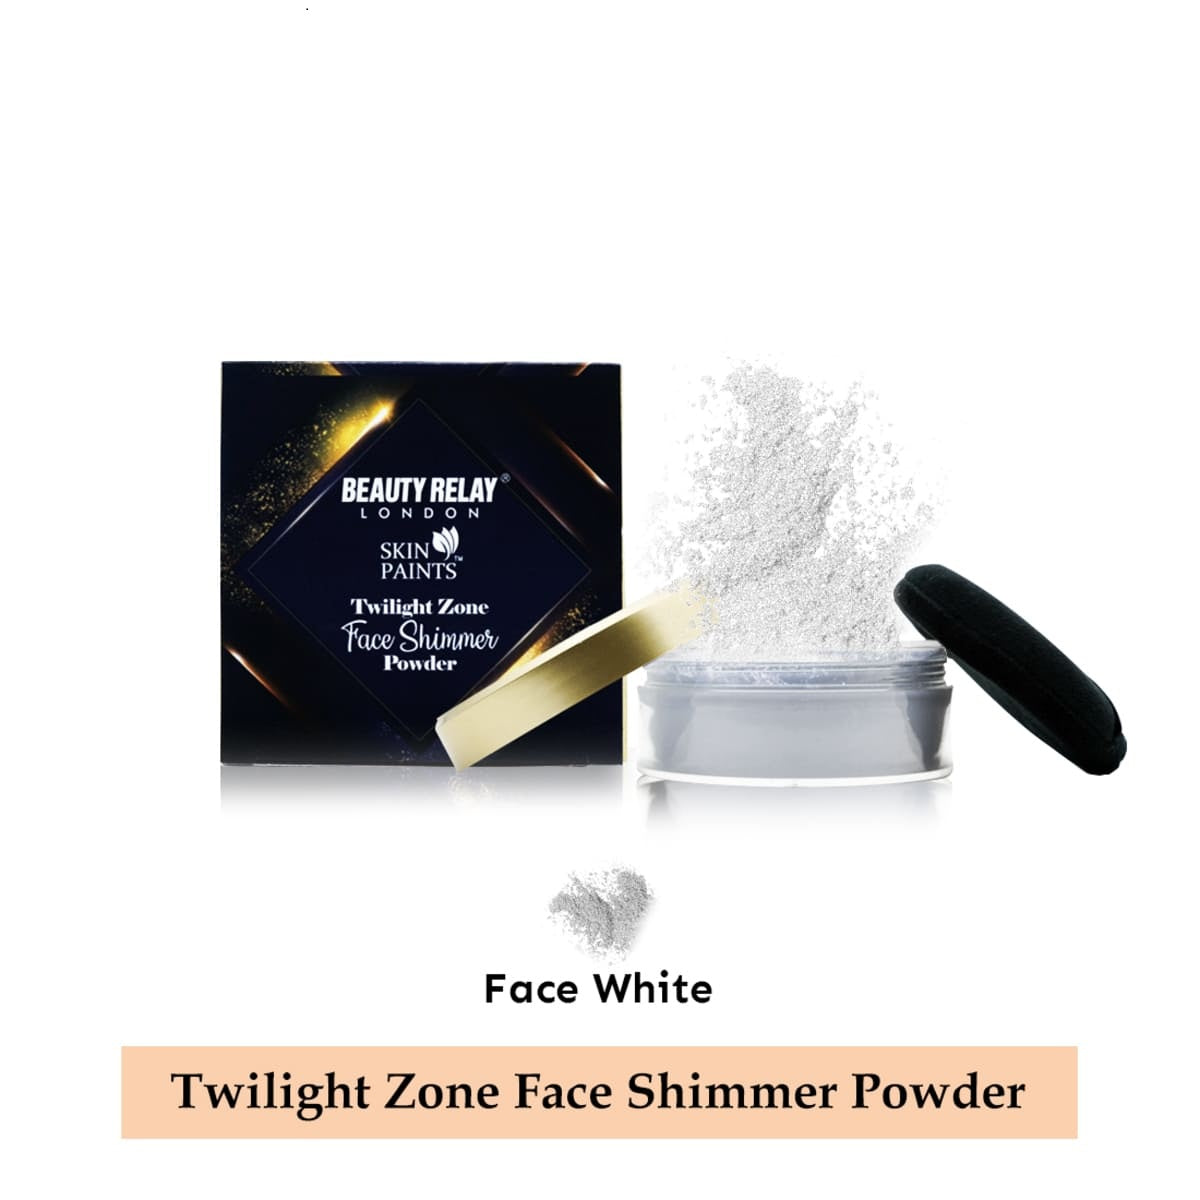 Twilight Zone Face Shimmer Powder